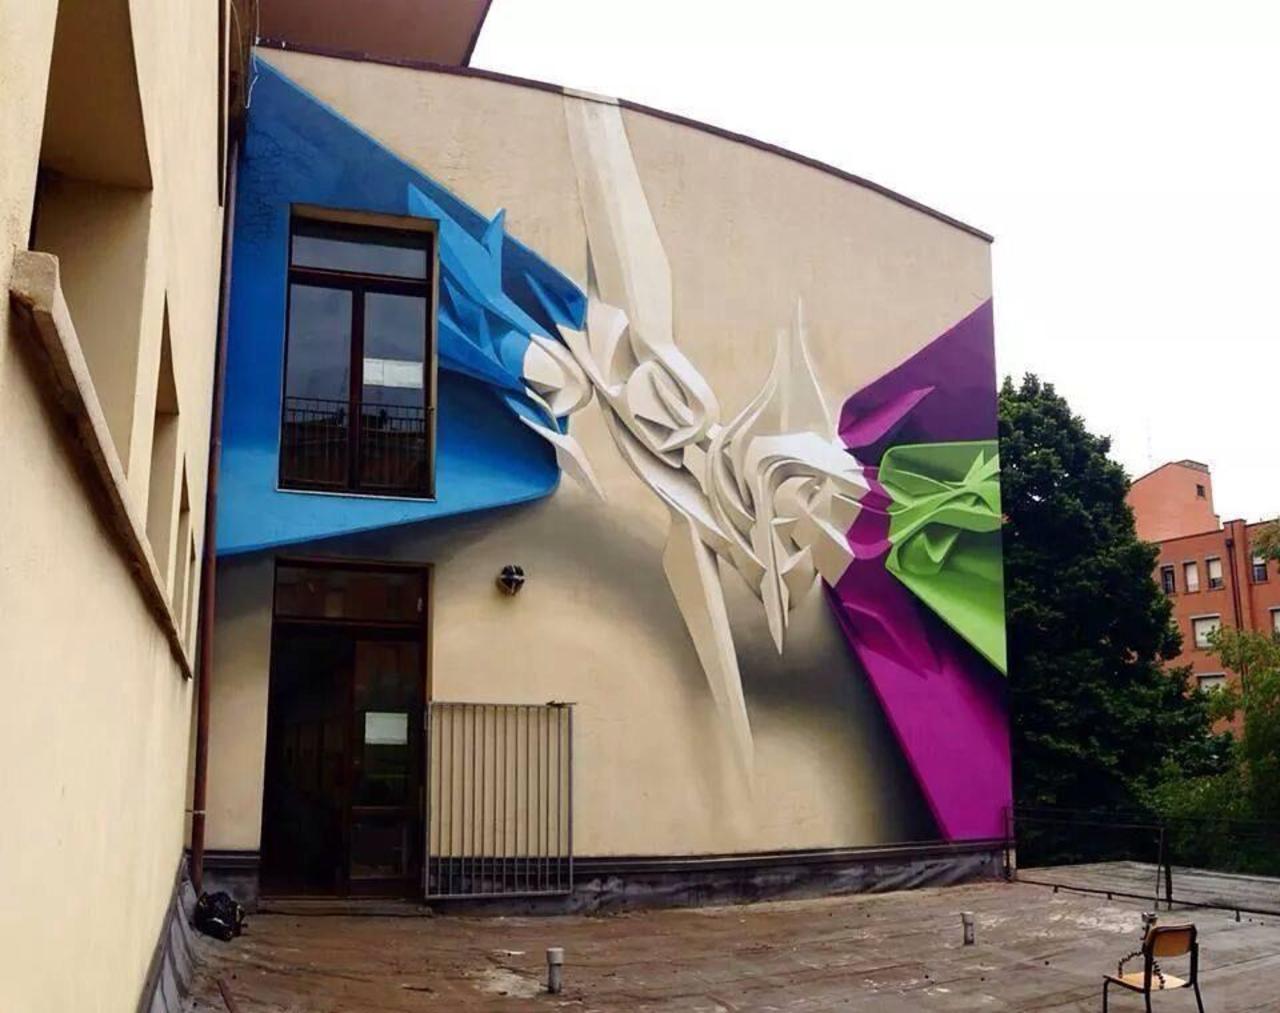 Artist @peeta3D amazing Street Art piece in Italy #art #mural #graffiti #streetart http://t.co/dXo311M5FY